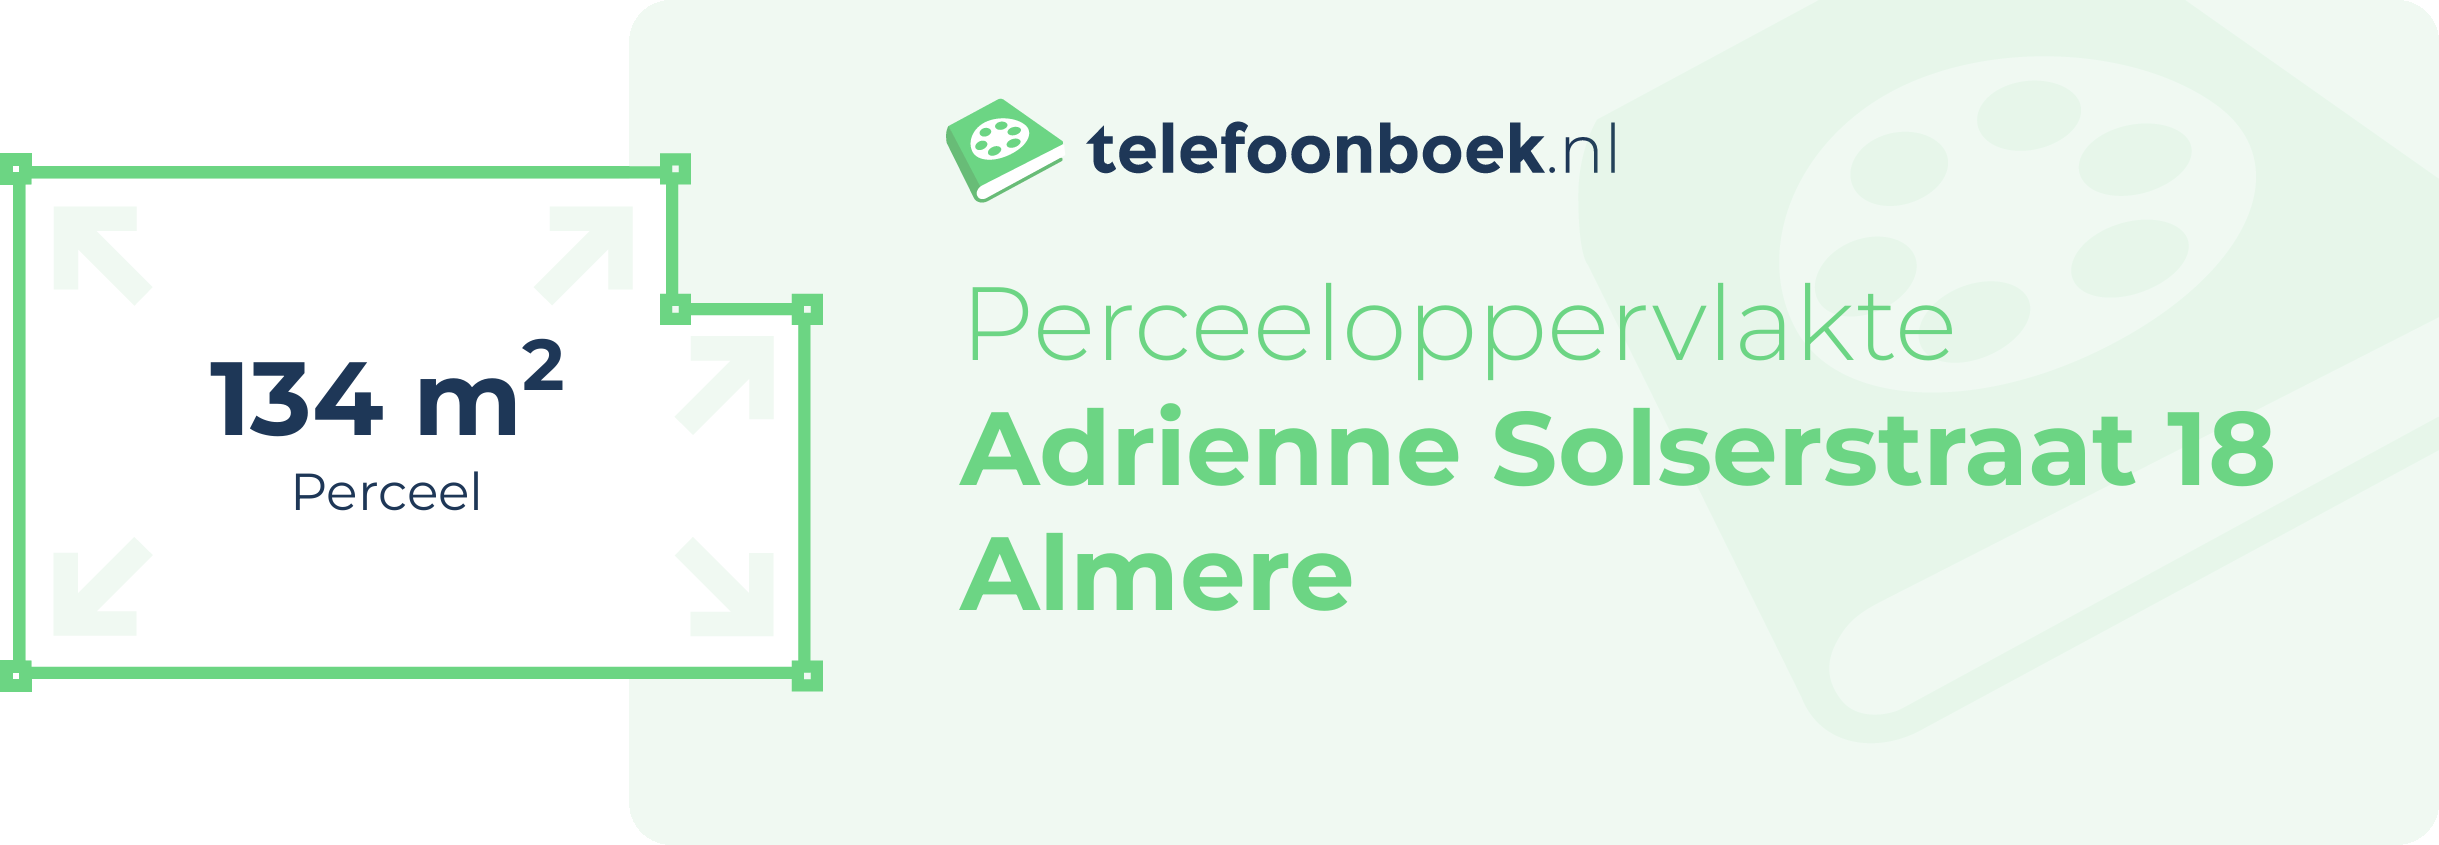 Perceeloppervlakte Adrienne Solserstraat 18 Almere